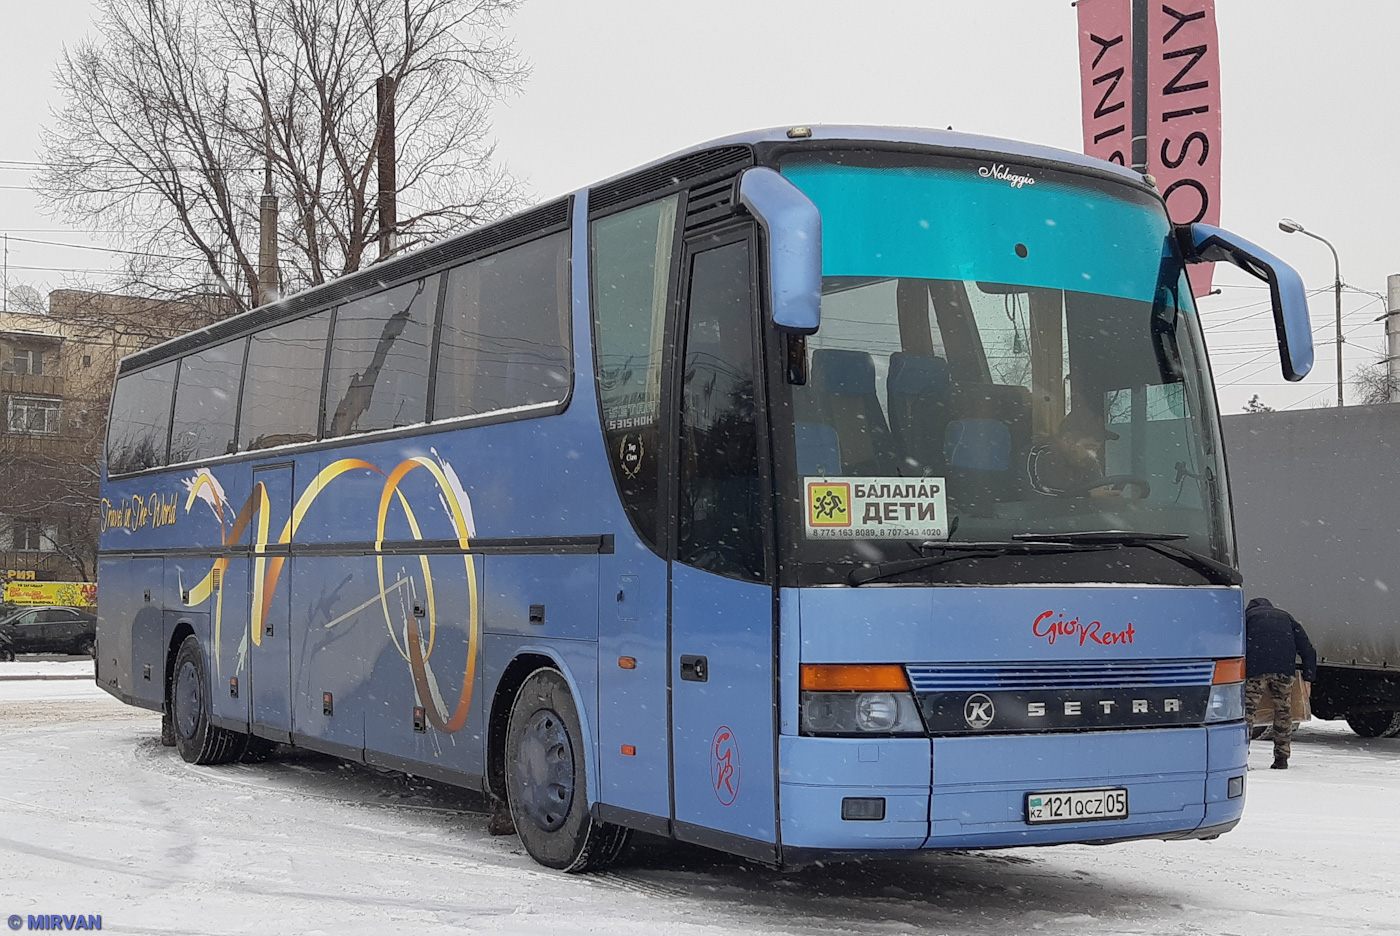 Almaty, Setra S315HDH/2 č. 121 QCZ 05